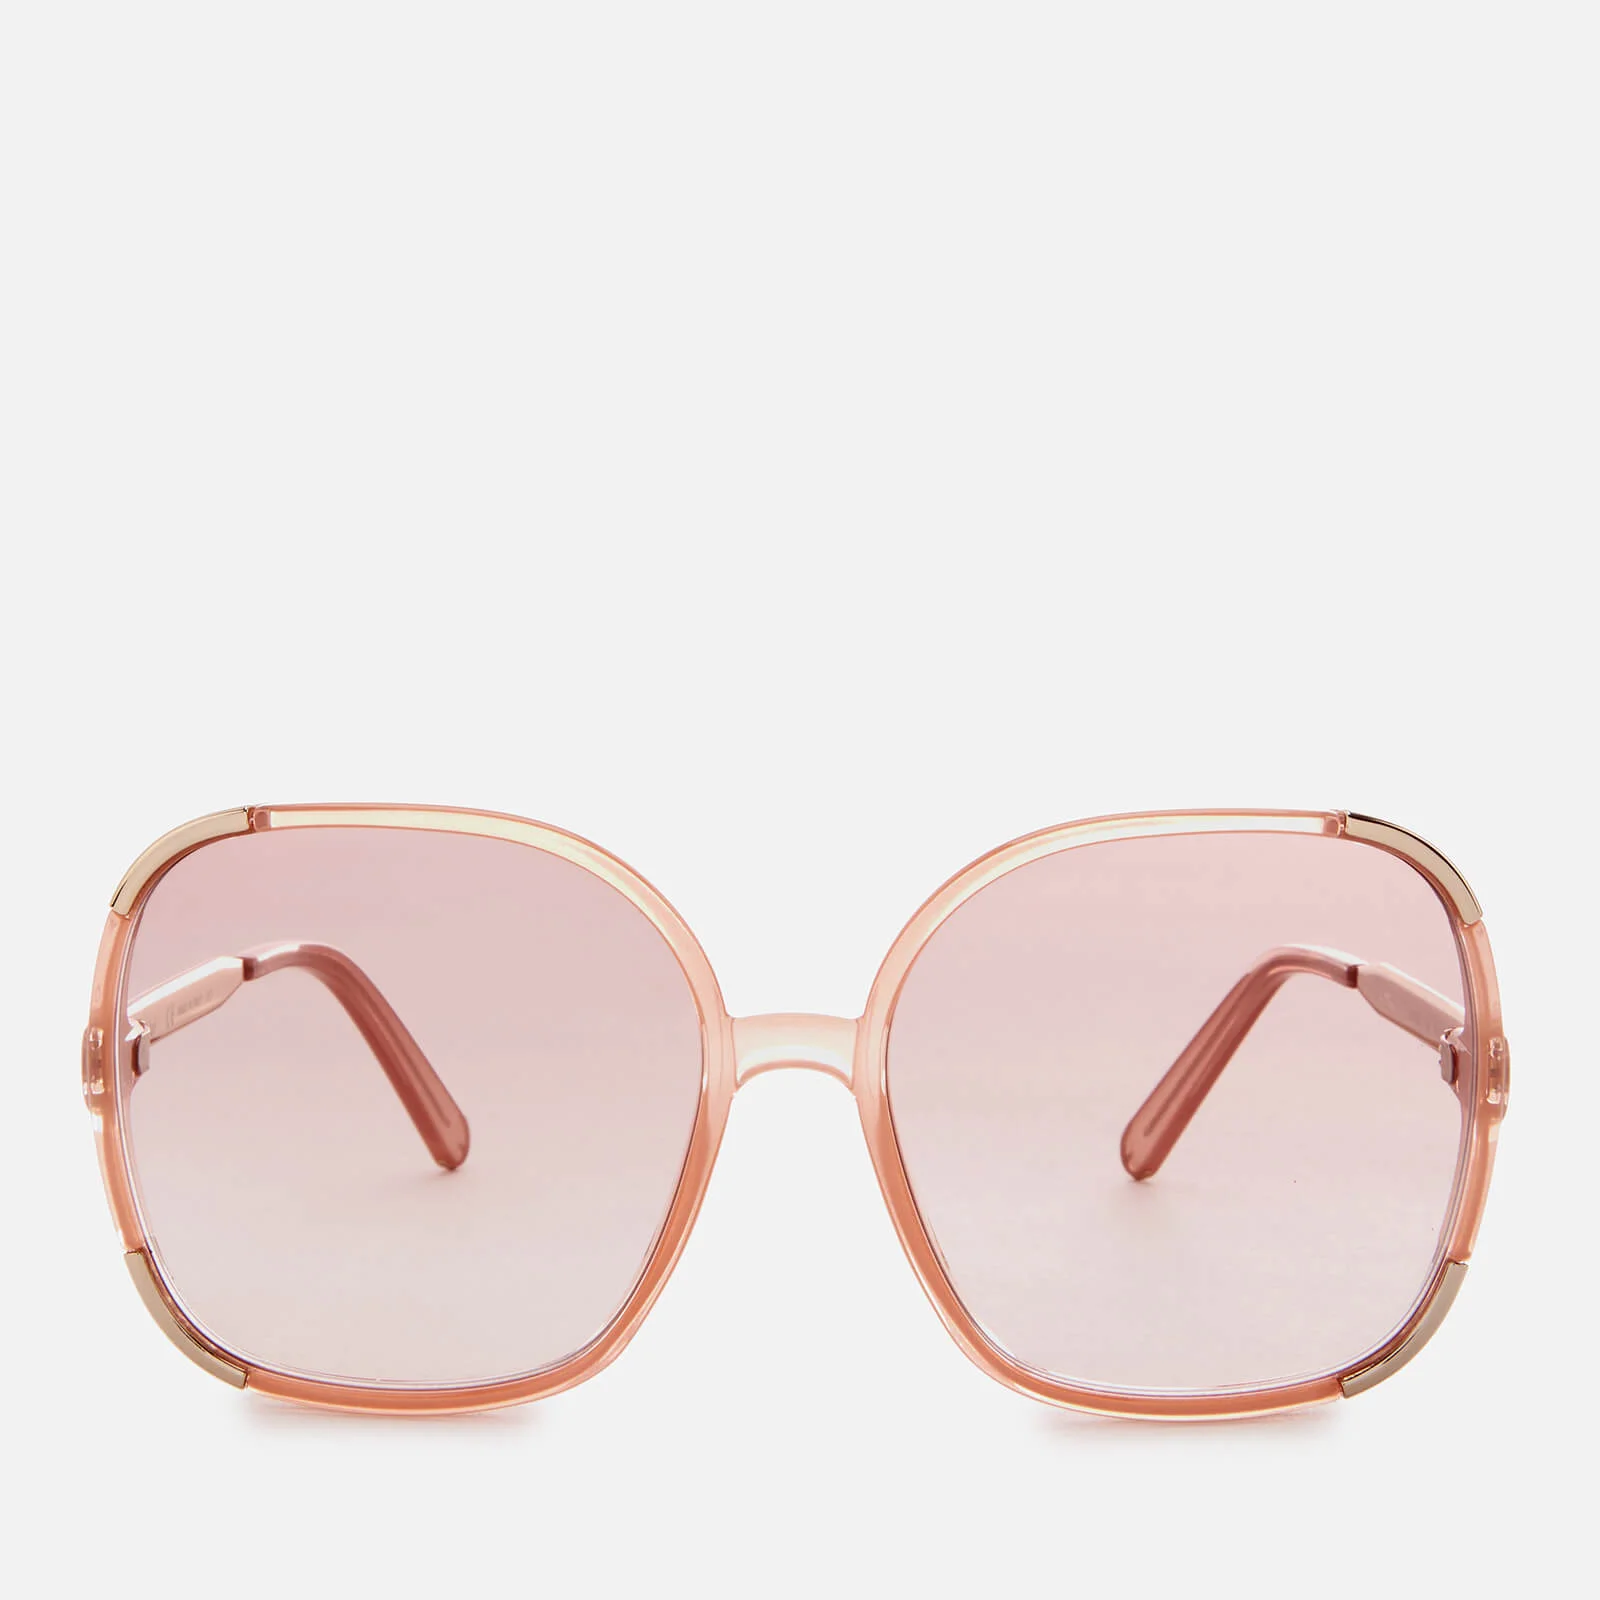 Chloe Women's Myrte Square-Frame Acetate Sunglasses - Peach Image 1